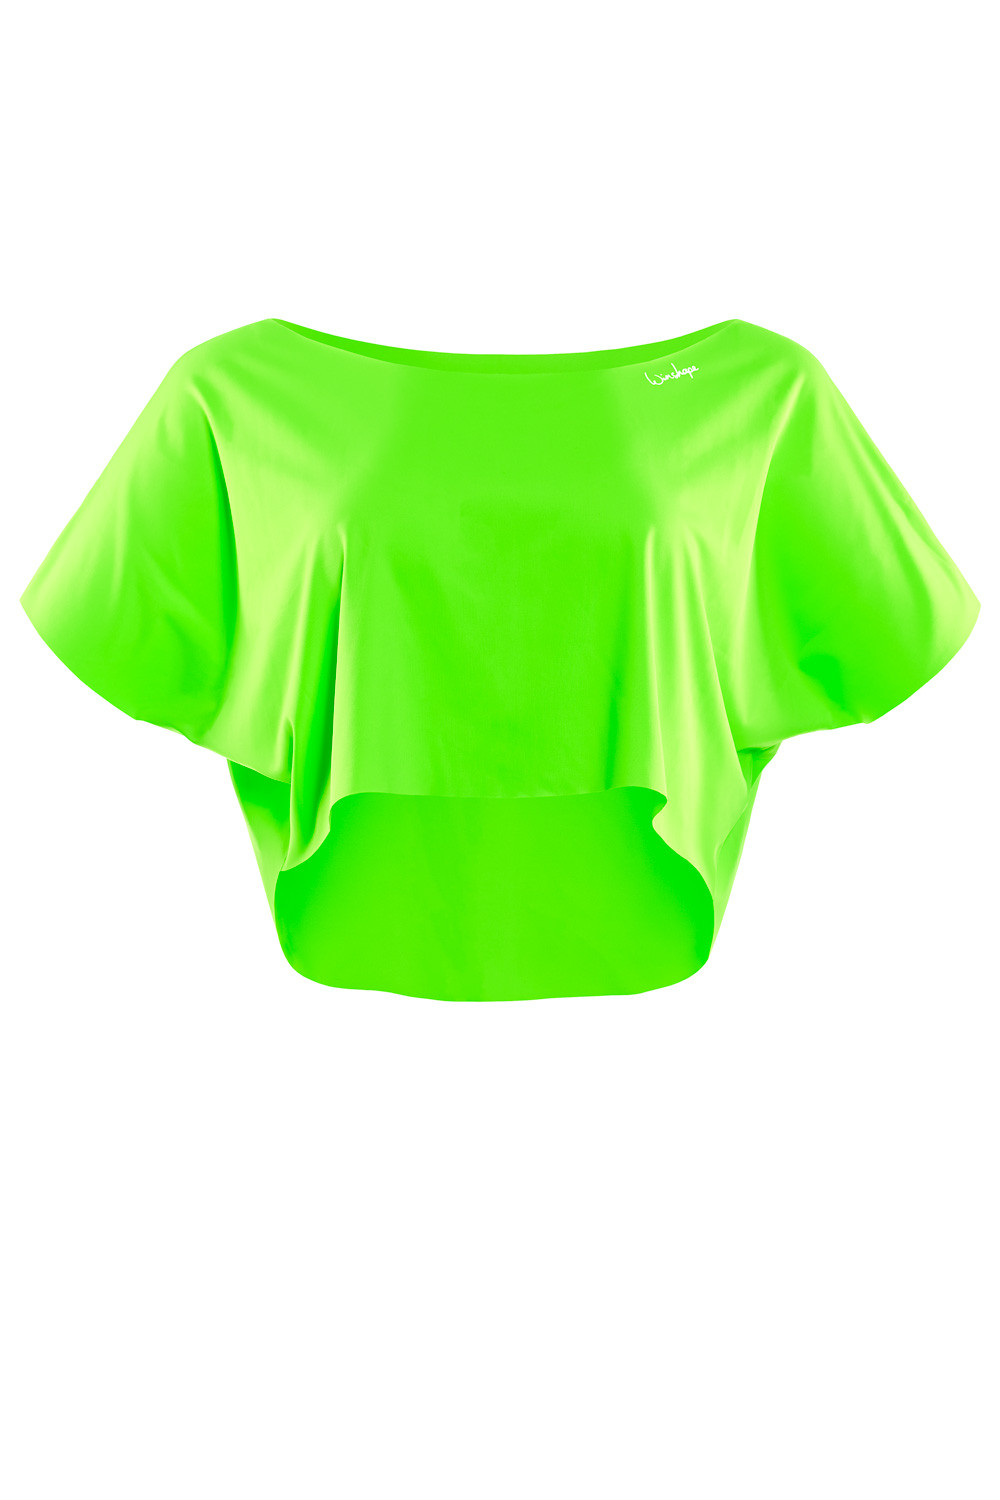 Winshape neon Cropped Dance Dance-Top Functional Light grün, Style DT104,